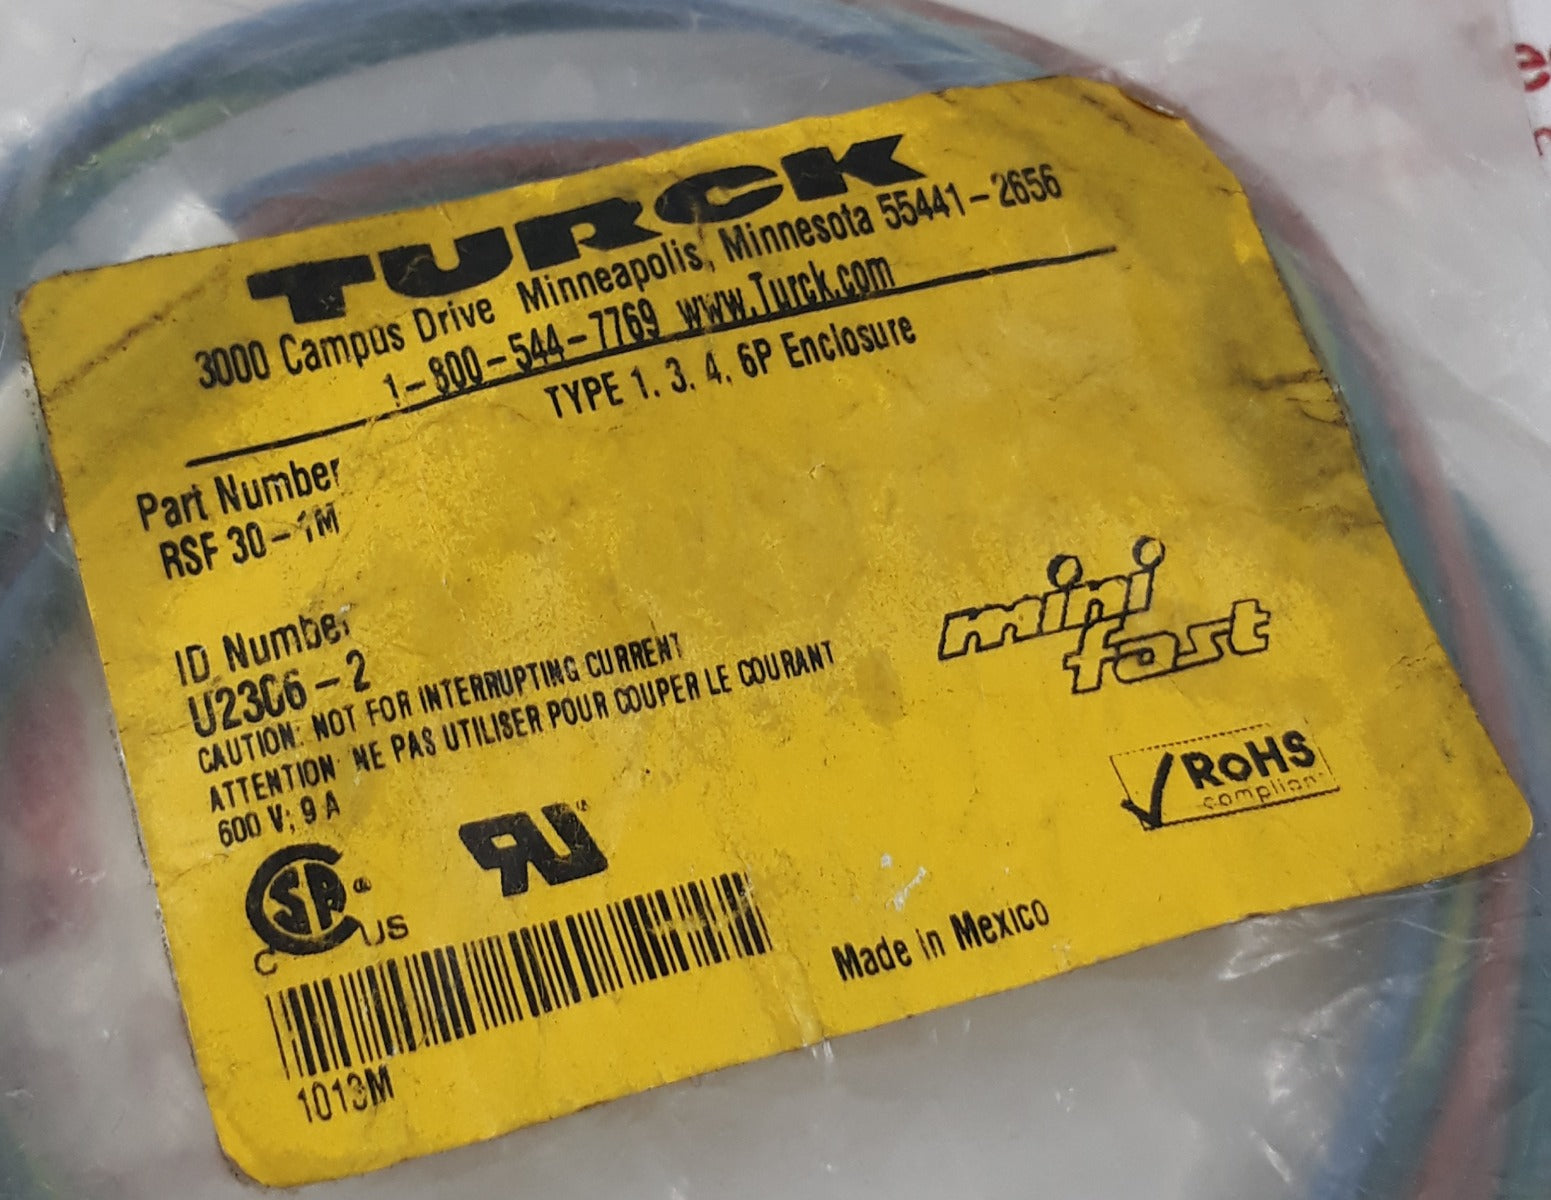 Turck Rsf 30-1M Minifast Receptacles